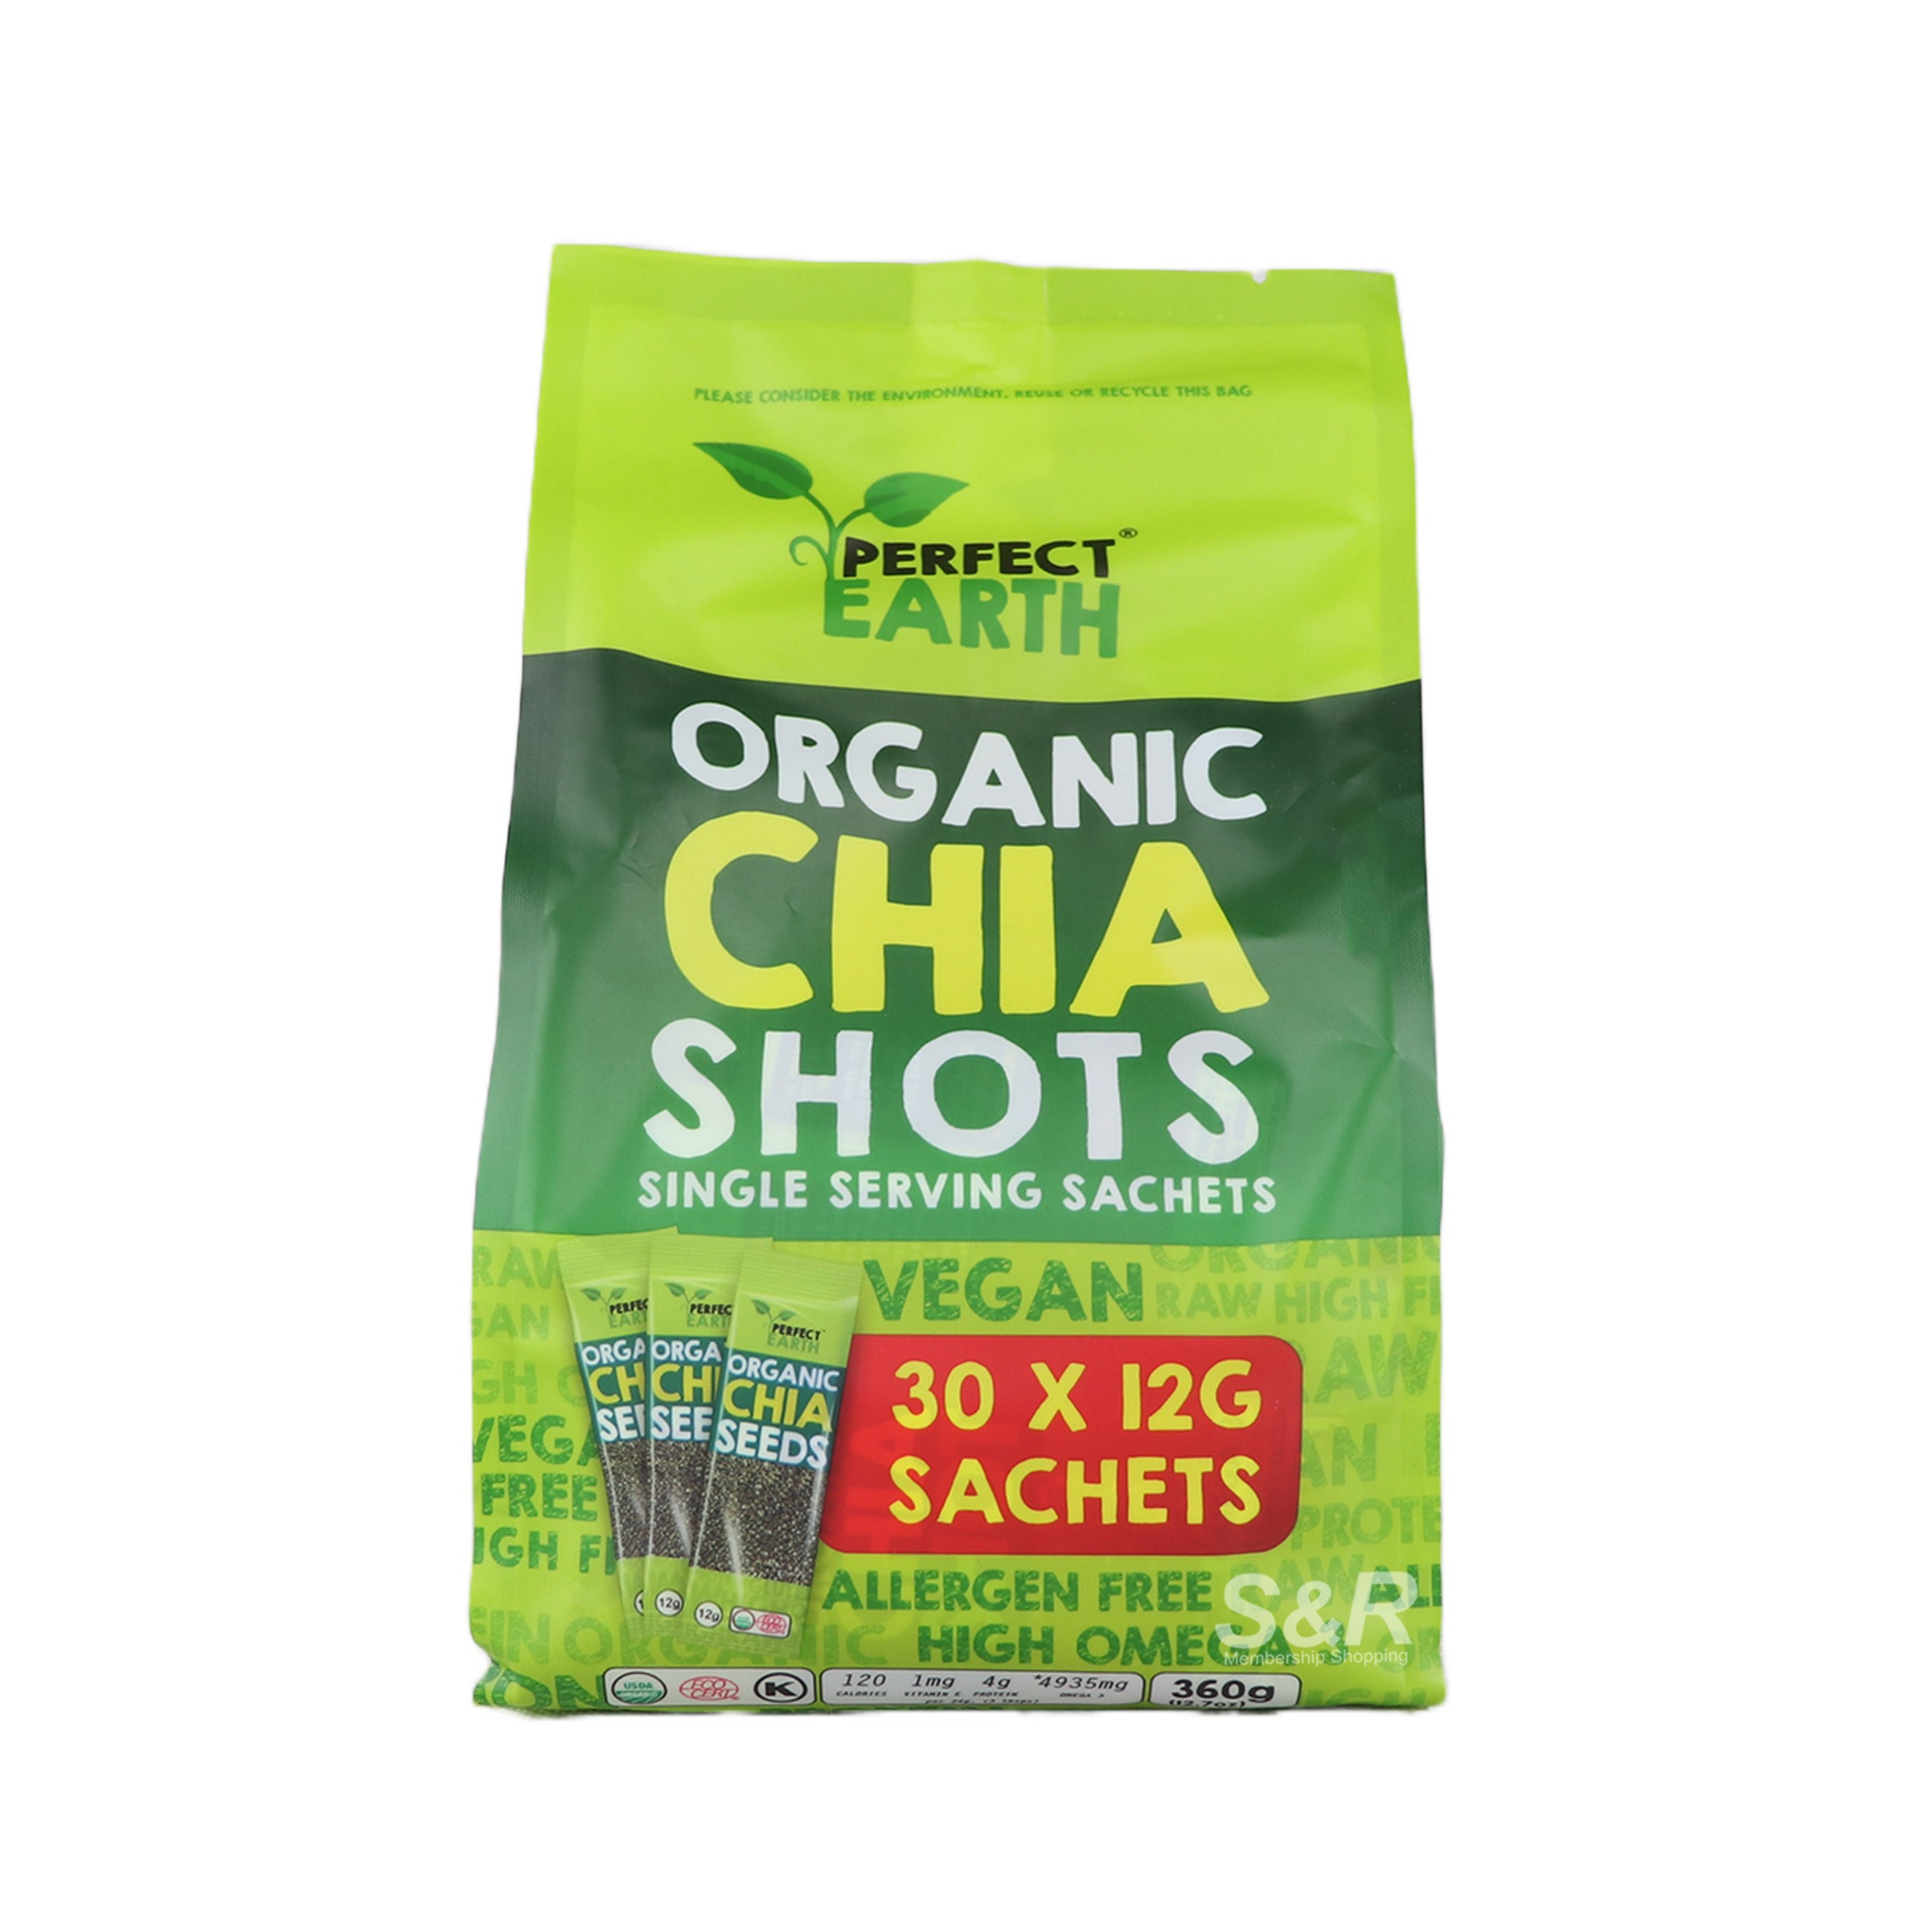 Perfect Earth Organic Chia Shots (12g x 30pcs)